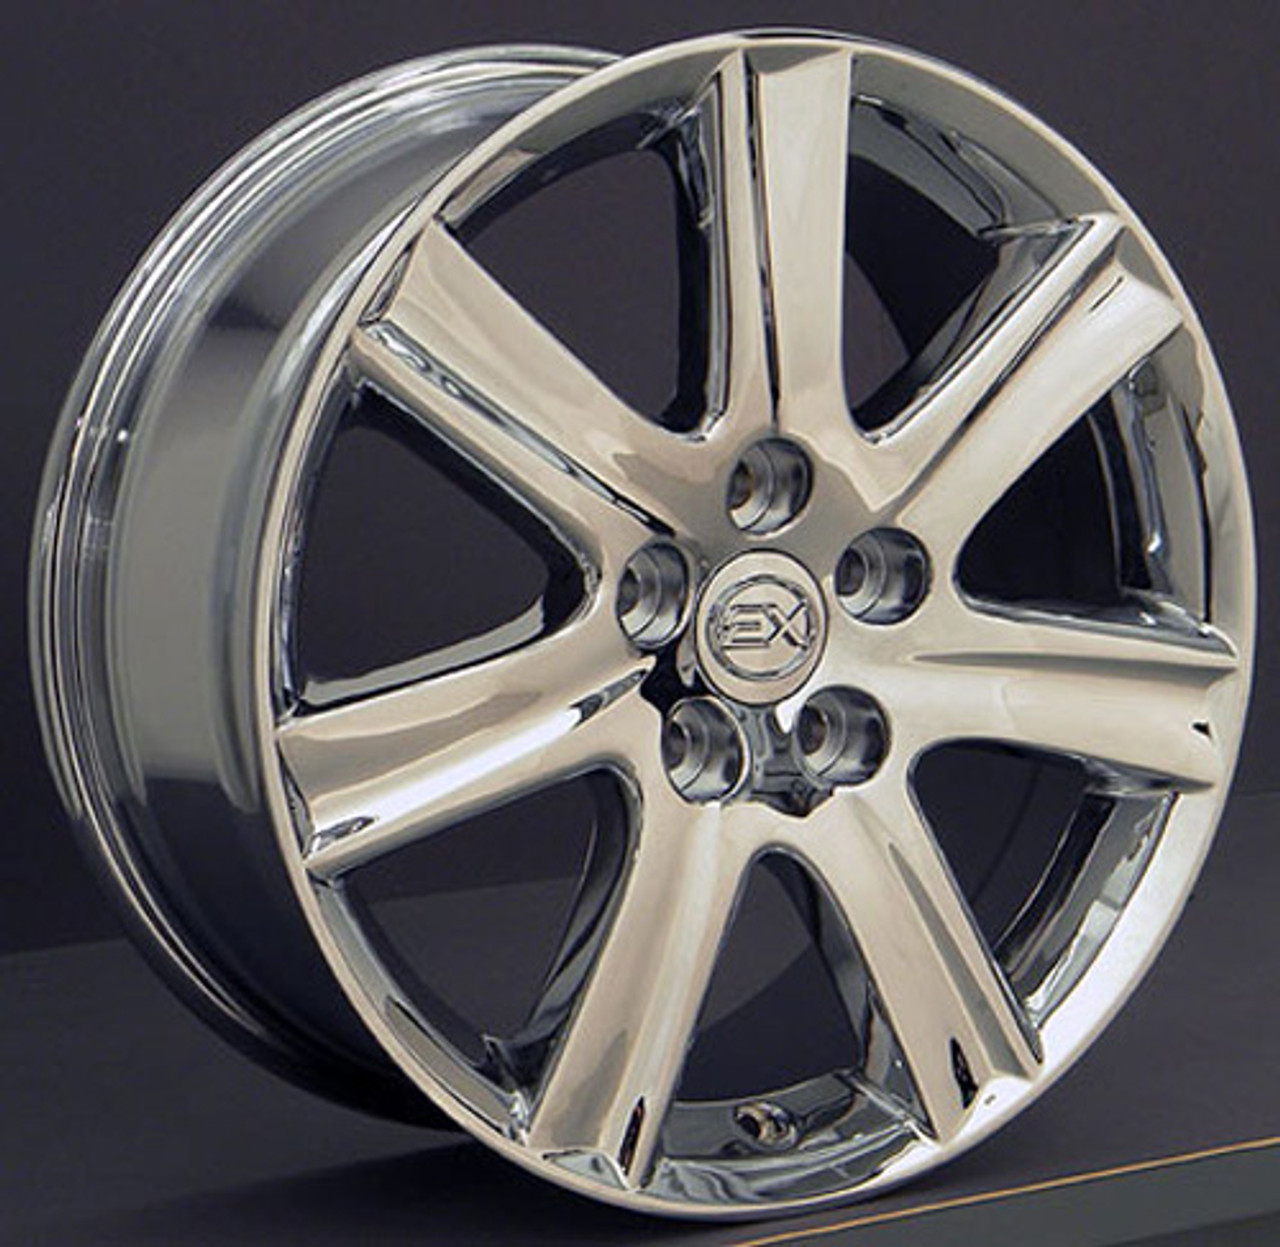 17" Fits Lexus ES 350 Chrome Wheels Set of 4 17x7" Rim Stock Wheel